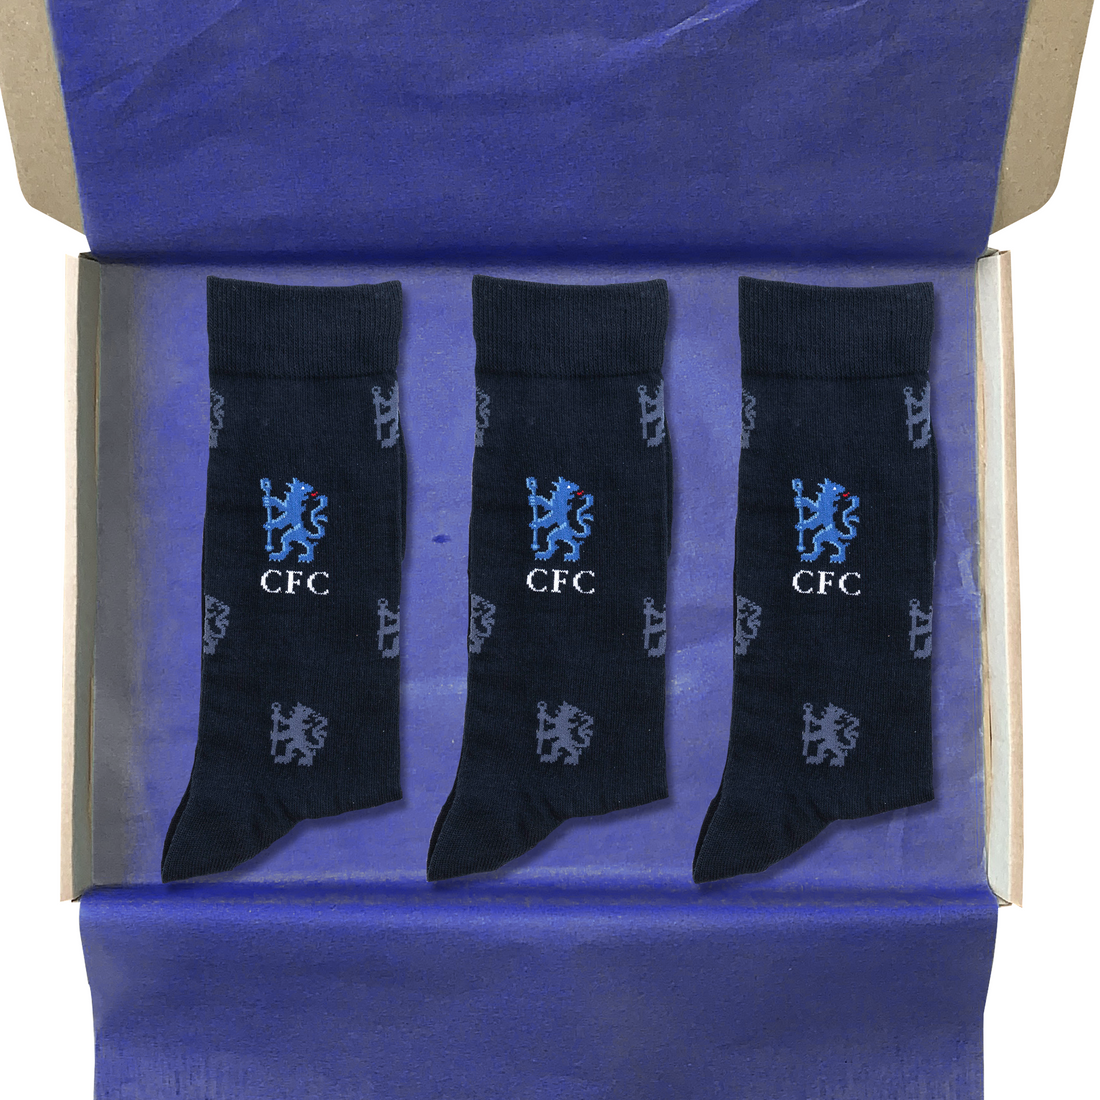 Chelsea FC Adult Socks - 3 Pack